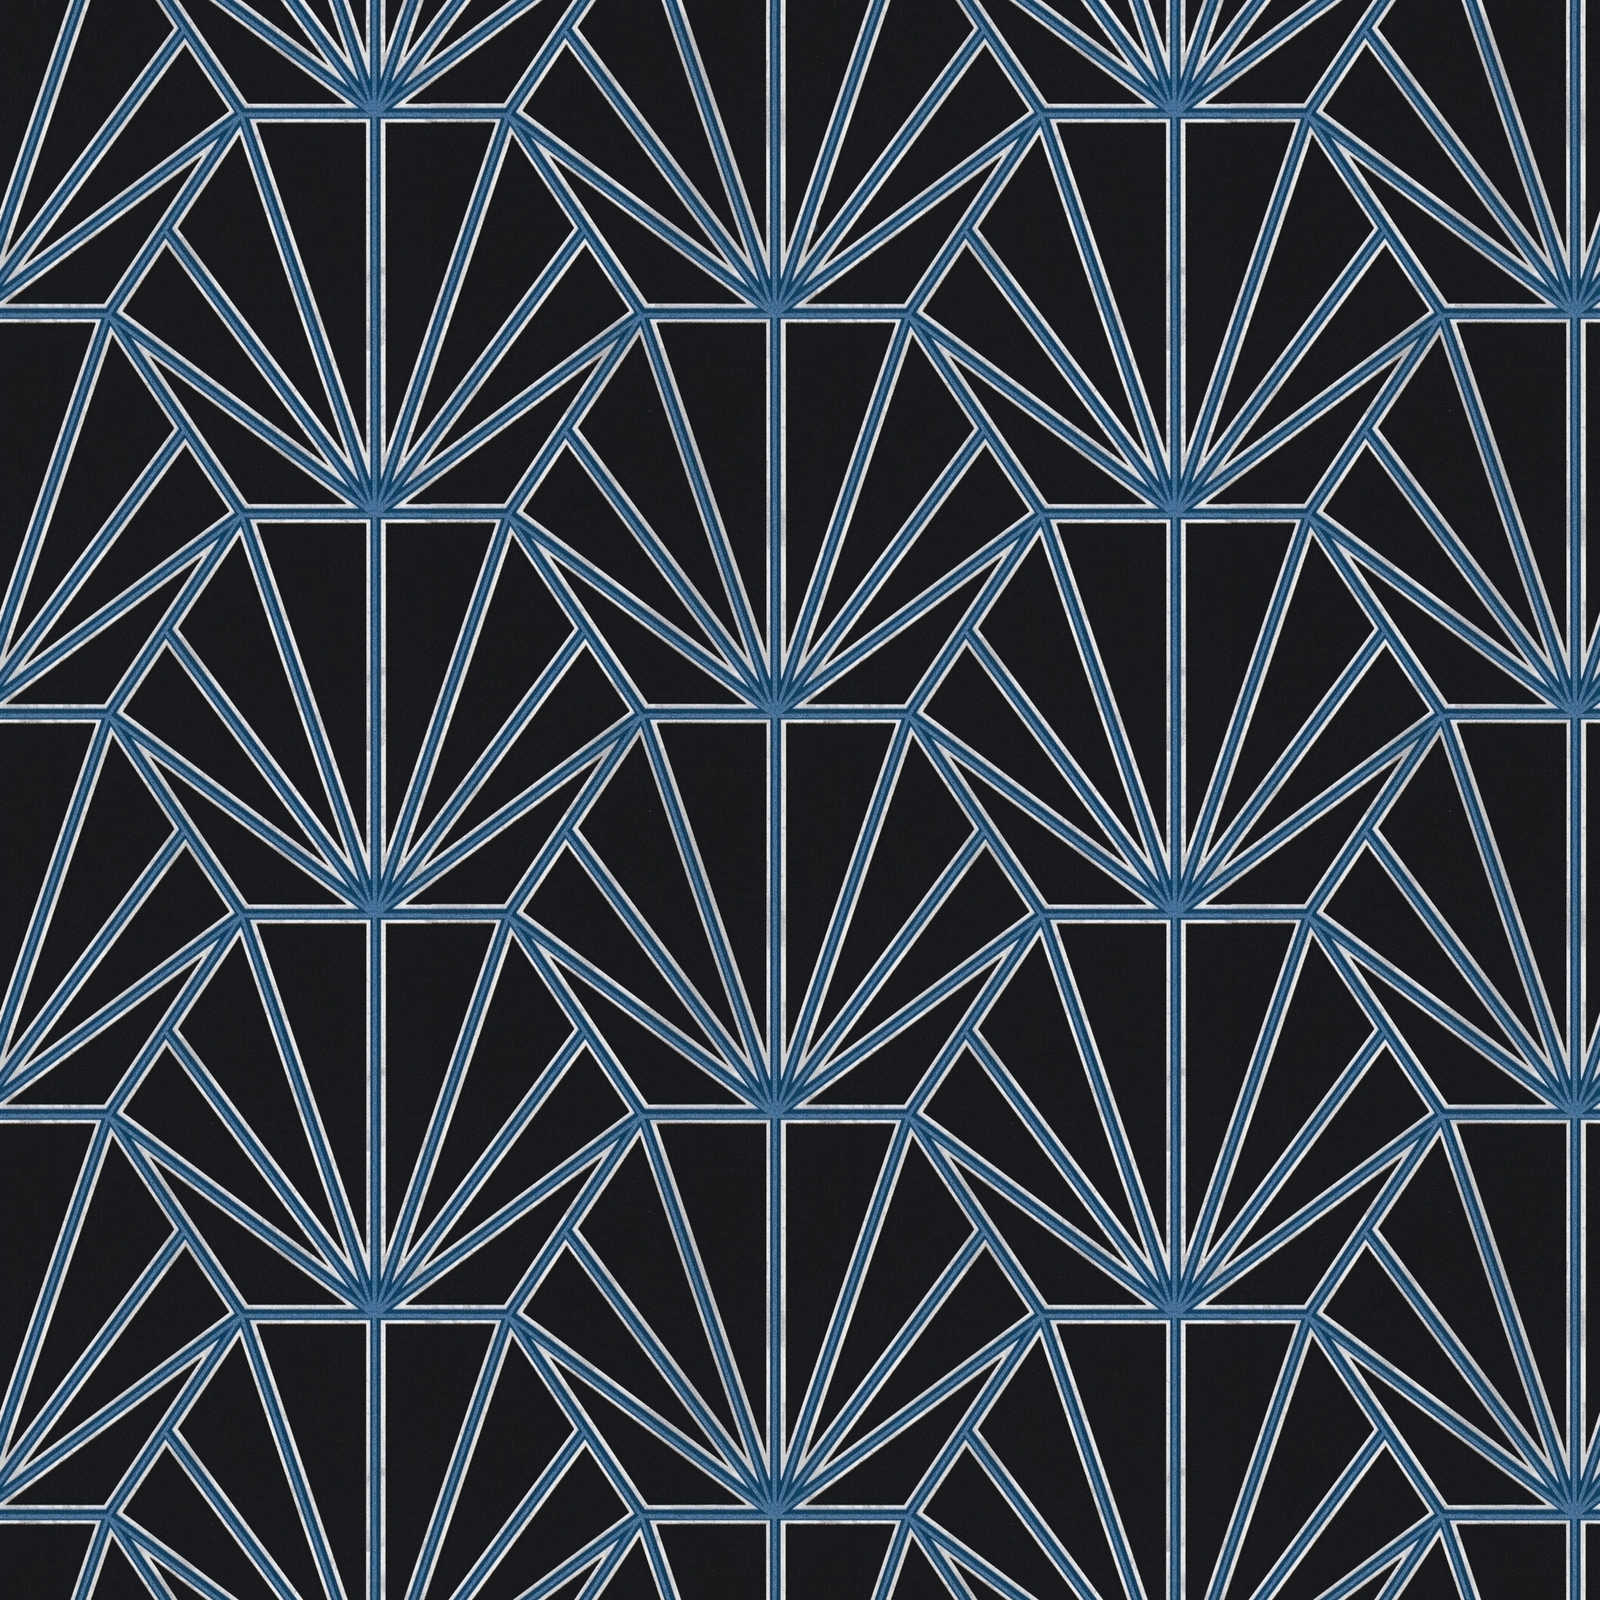 Art deco wallpaper patterned retro look - black, blue, white
